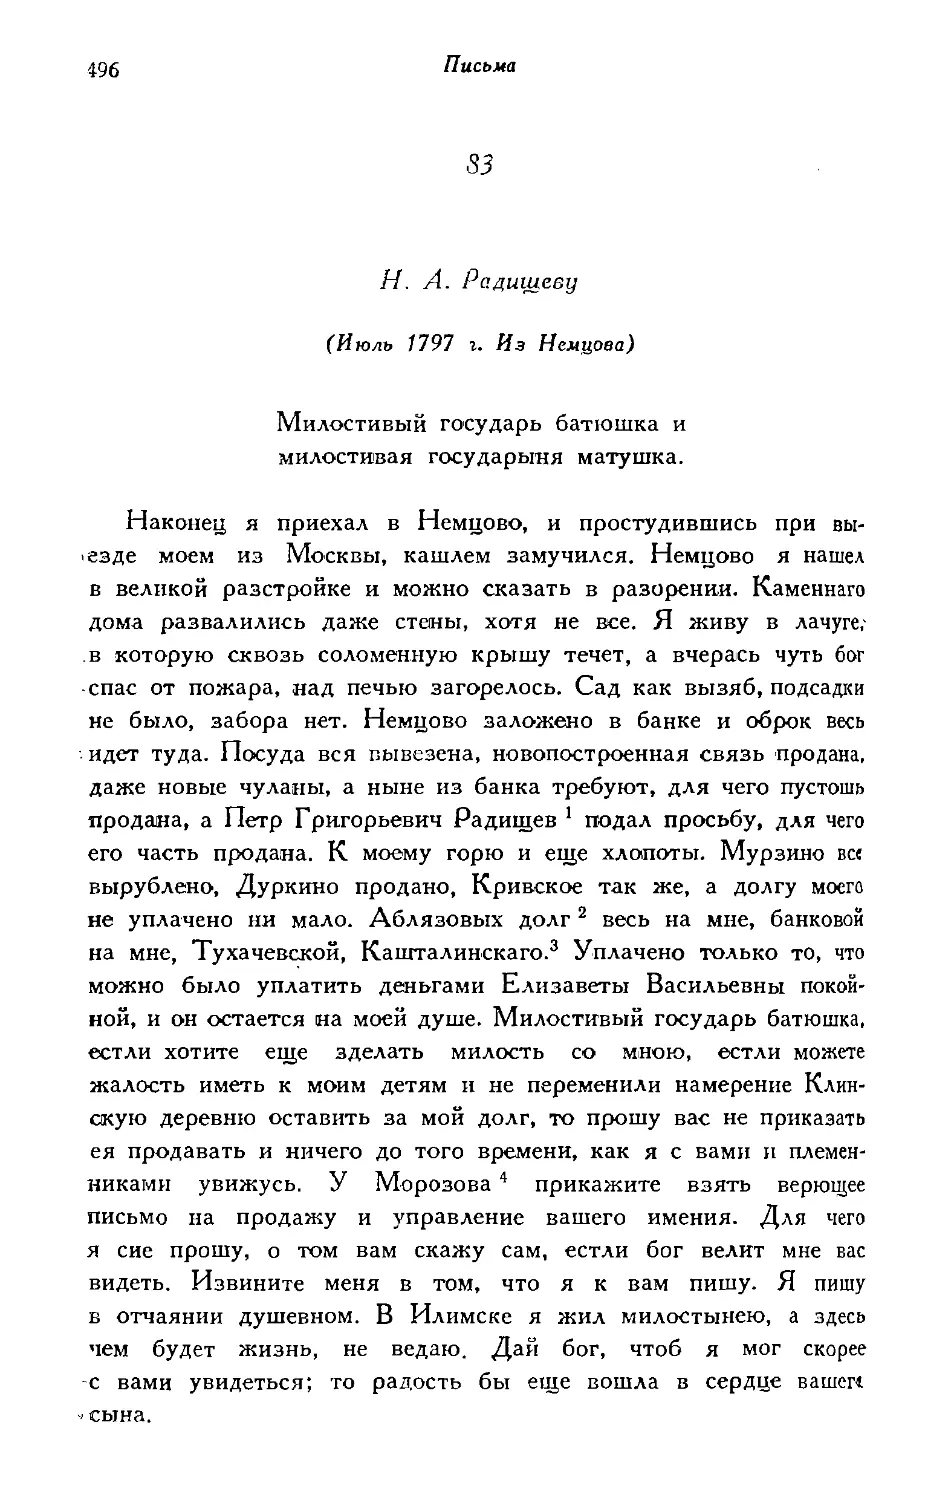 83. Н. А. Радищеву (июль 1797 г.)